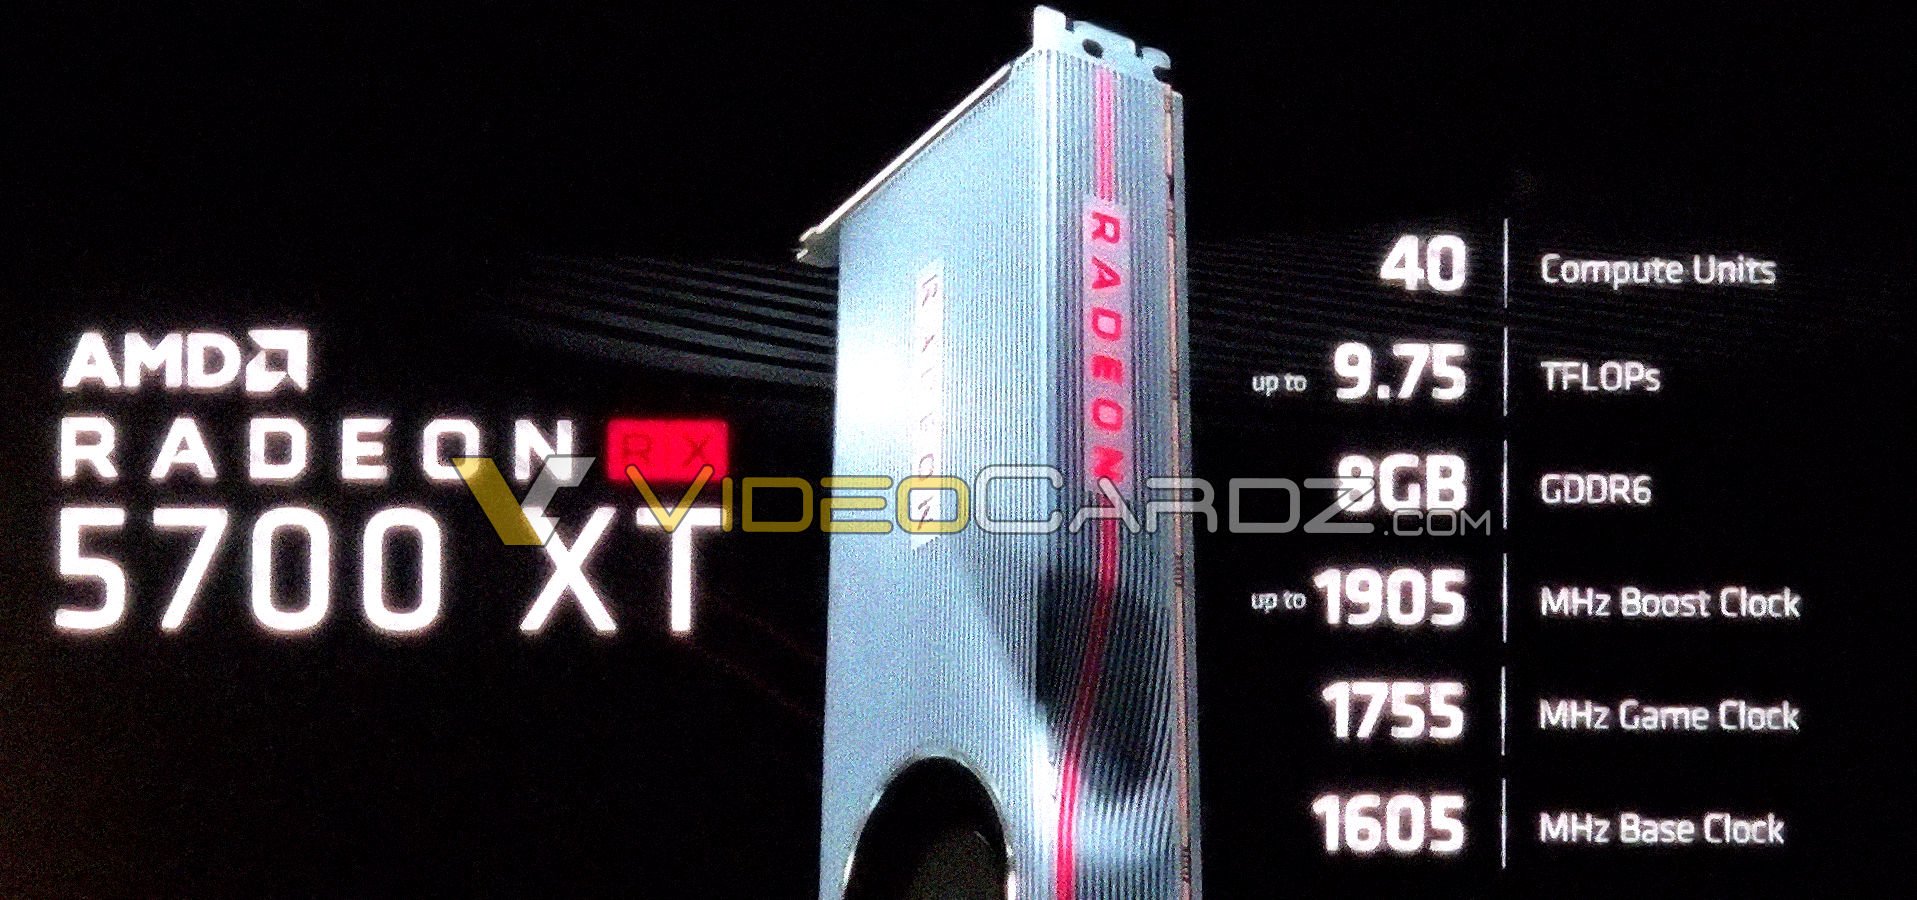 Radeon RX 5700 XT